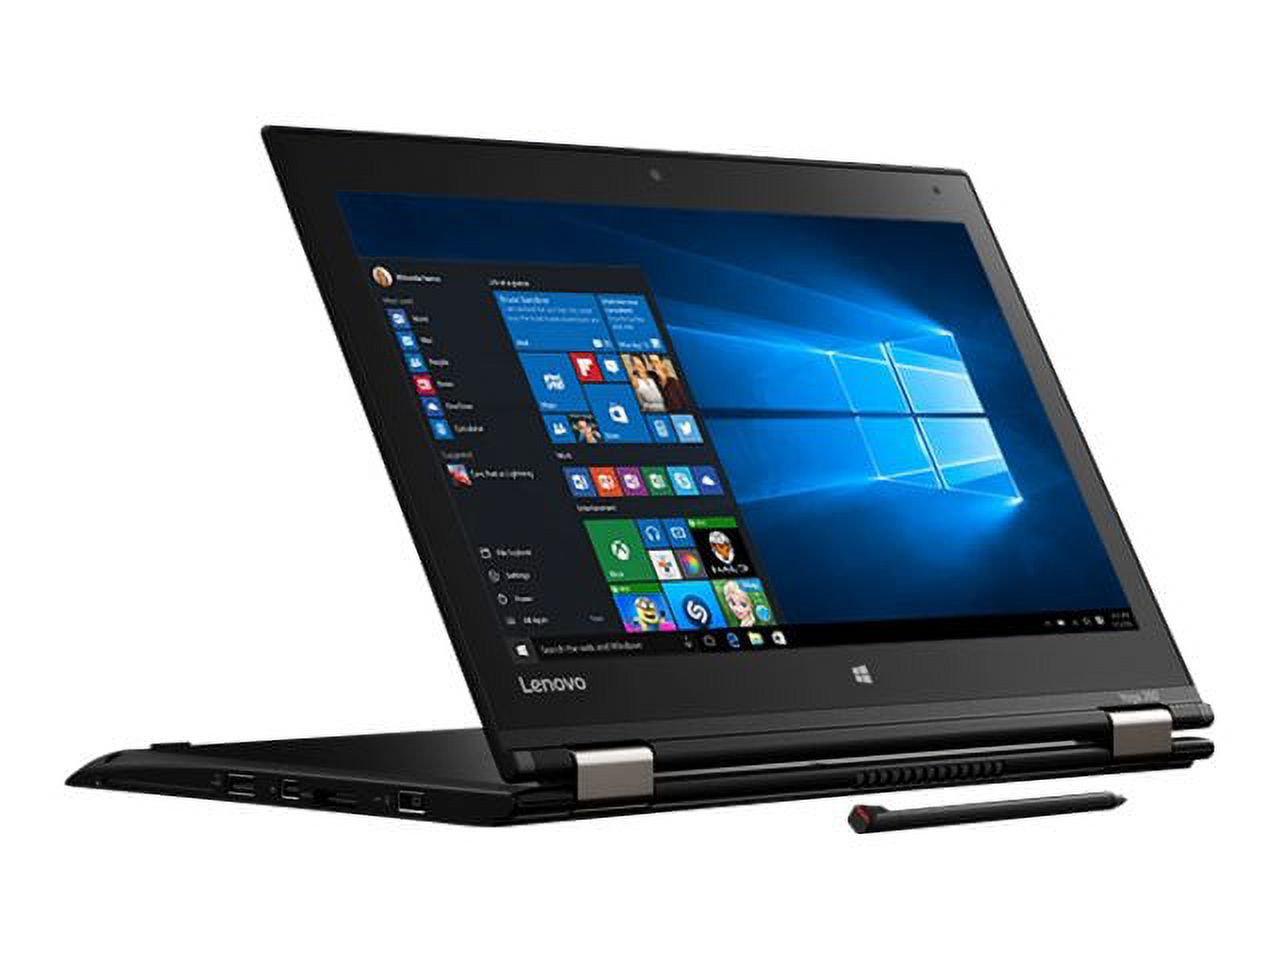 Lenovo ThinkPad Yoga 260 20FD - Ultrabook - Intel Core i5 - 6200U / up to 2.8 GHz - Win 10 Pro 64-bit - HD Graphics 520 - 8 GB RAM - 256 GB SSD TCG Opal Encryption 2 - 12.5" IPS touchscreen 1920 x 1080 (Full HD) - Wi-Fi 5 - midnight black - kbd: US - image 1 of 9